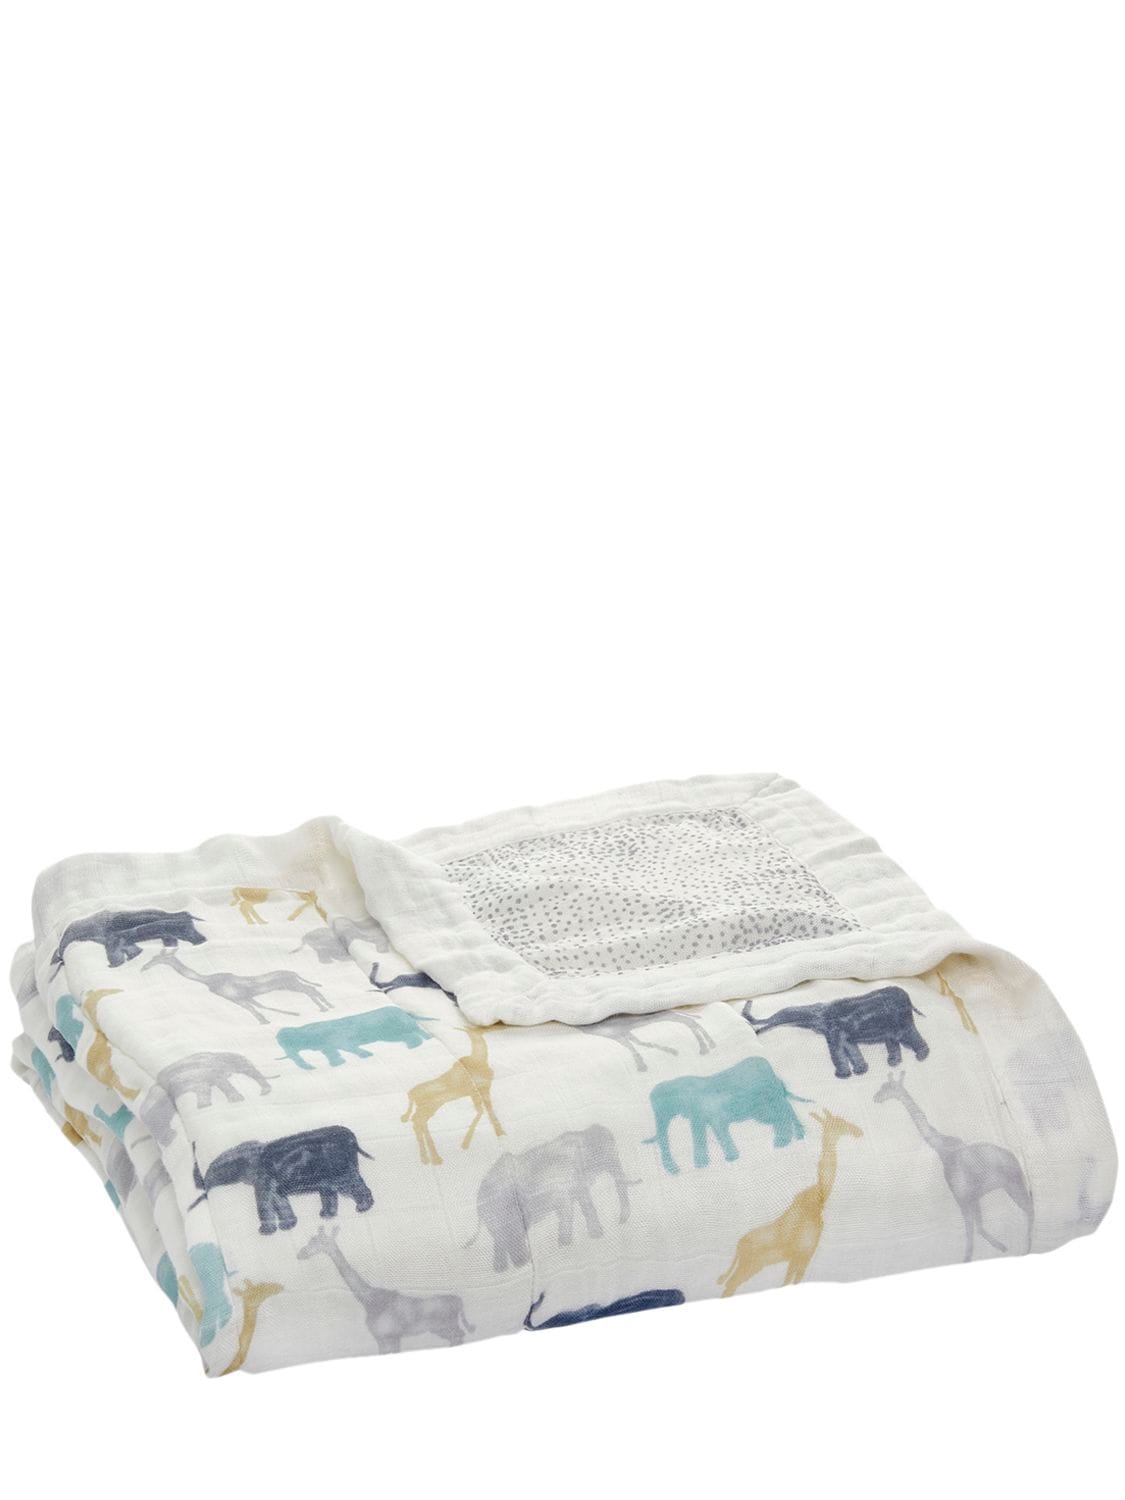 Aden + Anais Kids' Dumbo Print Cotton Muslin Blanket In Gray